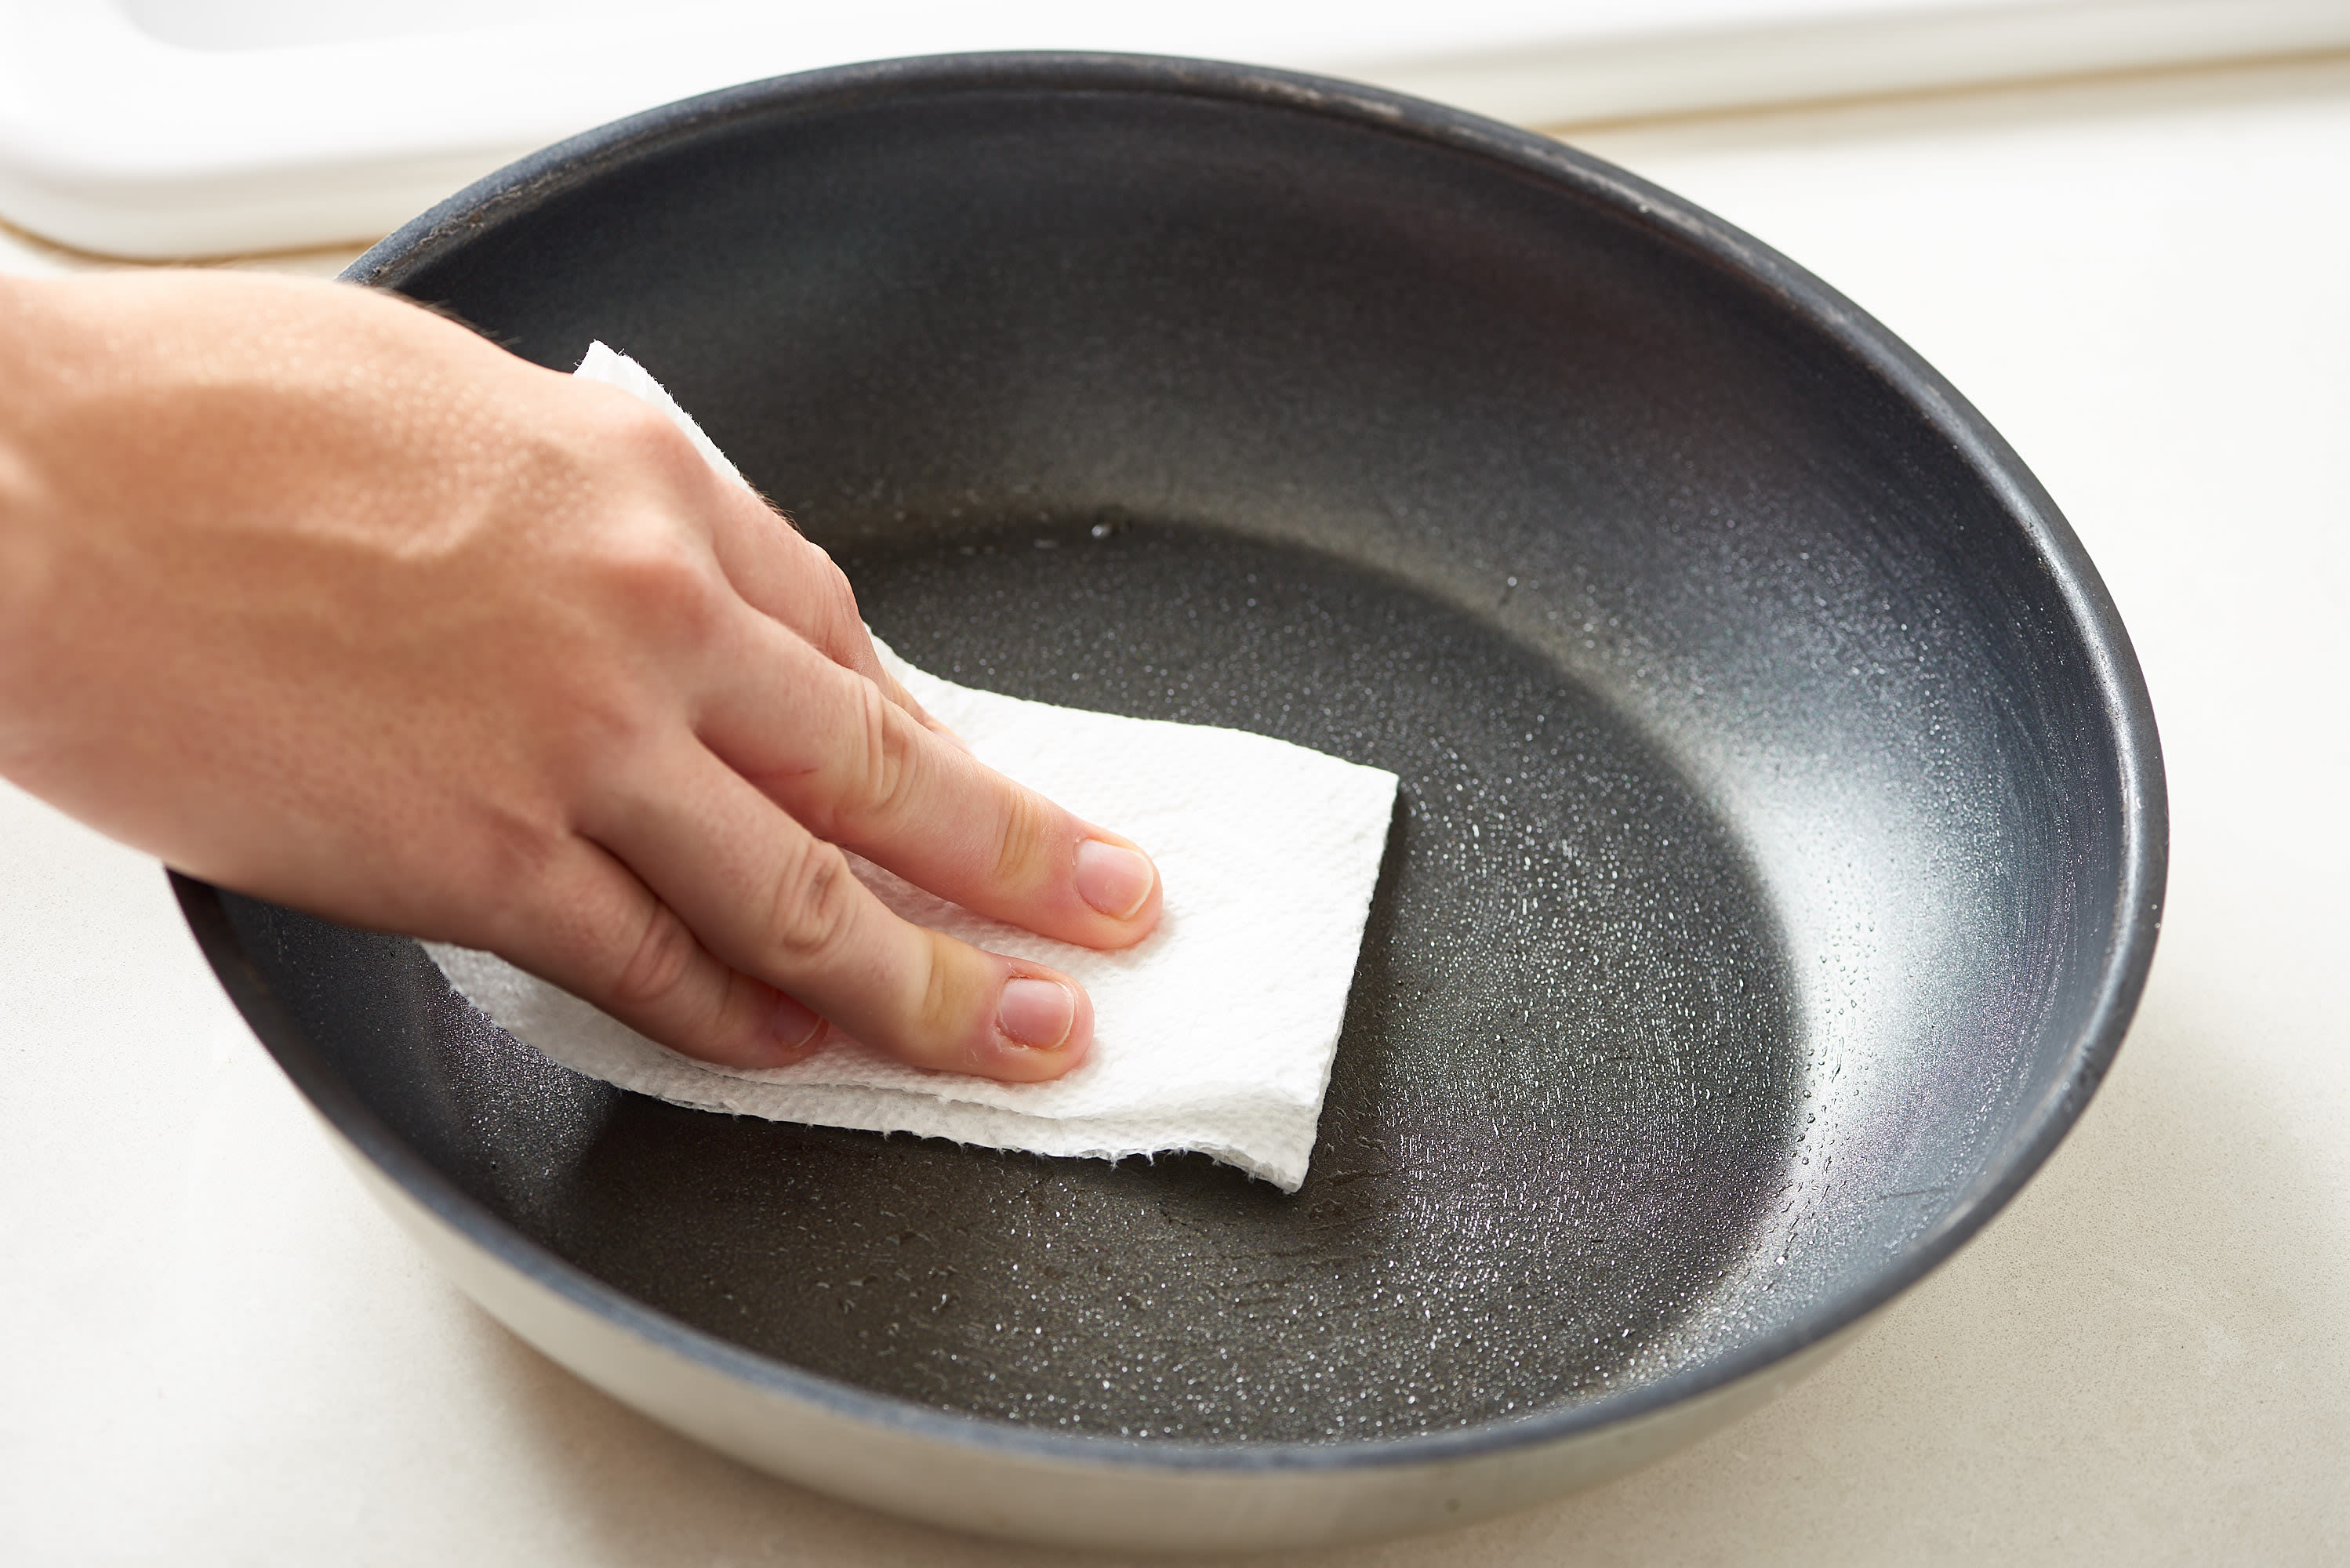 Frying Pan clean. Scratch Pan. Губка чистить казаны. Washing Vegetables with Oil Stains is easy to clean. Чугунная сковорода перед первым использованием